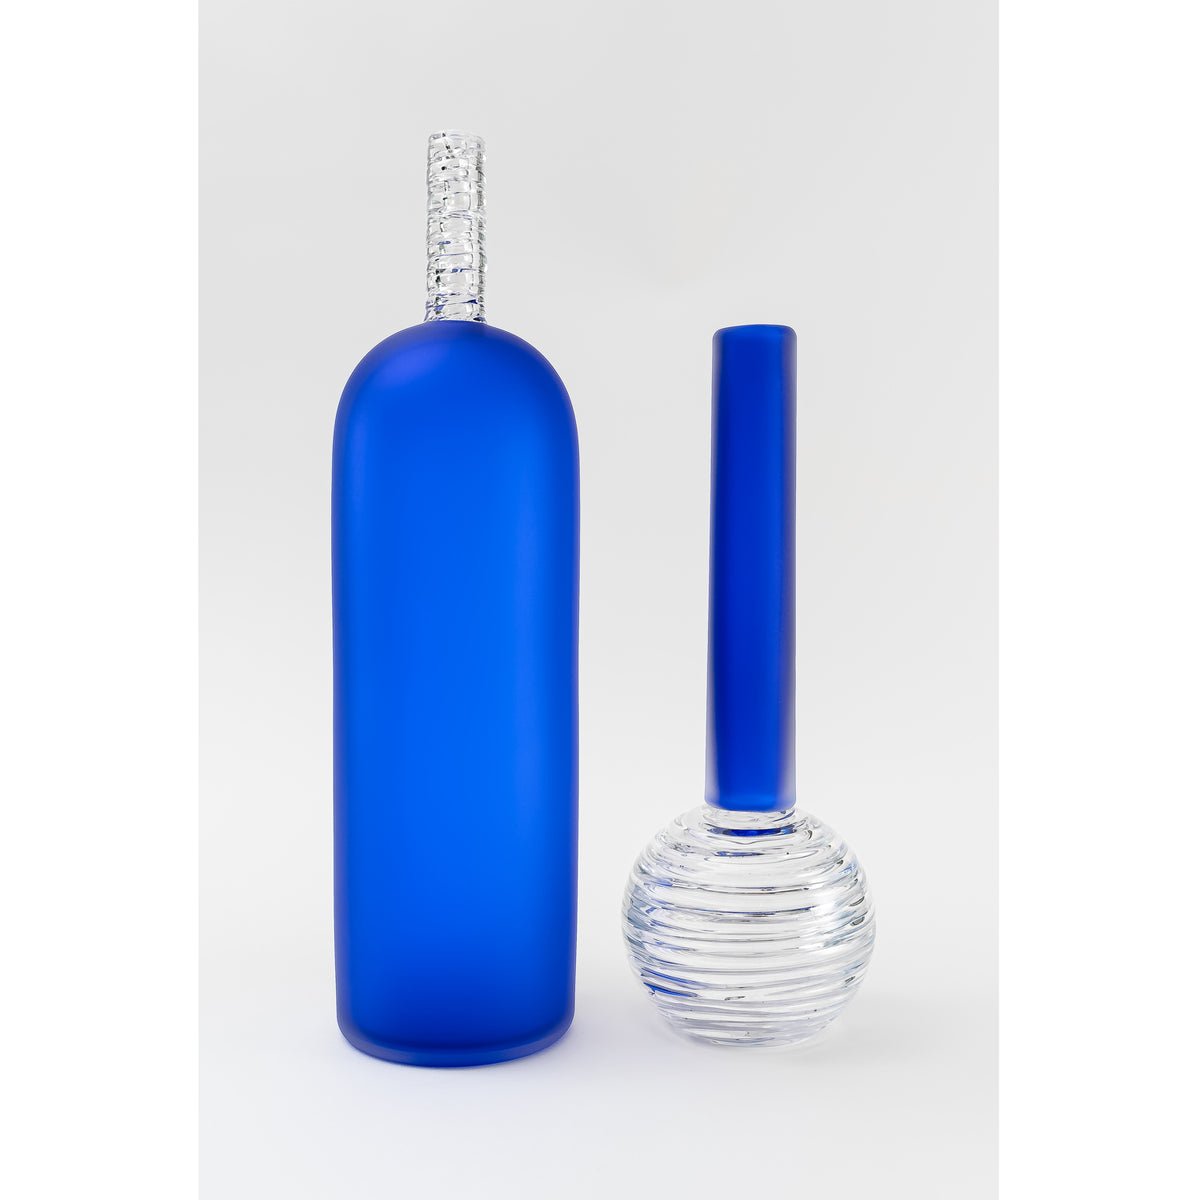 Potions Sari Blue Lrg Wine Bottle